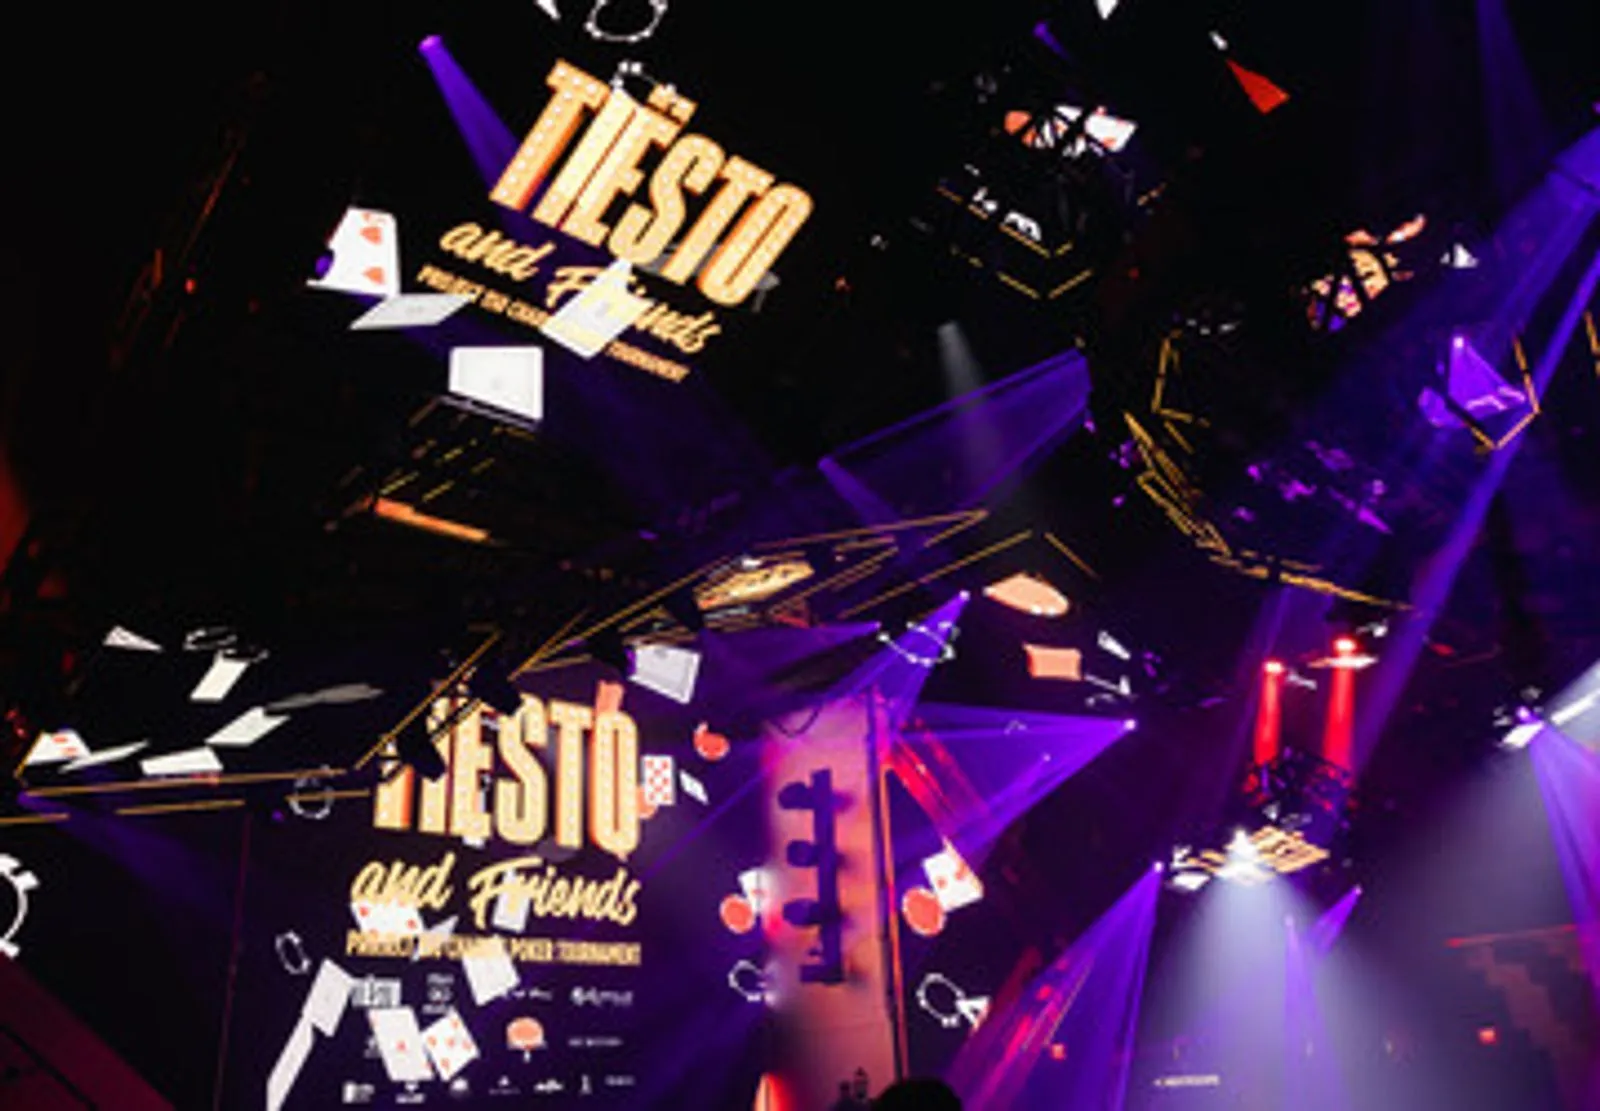 PHOTOS: Resorts World hosts Charity Poker Tournament featuring Tiesto